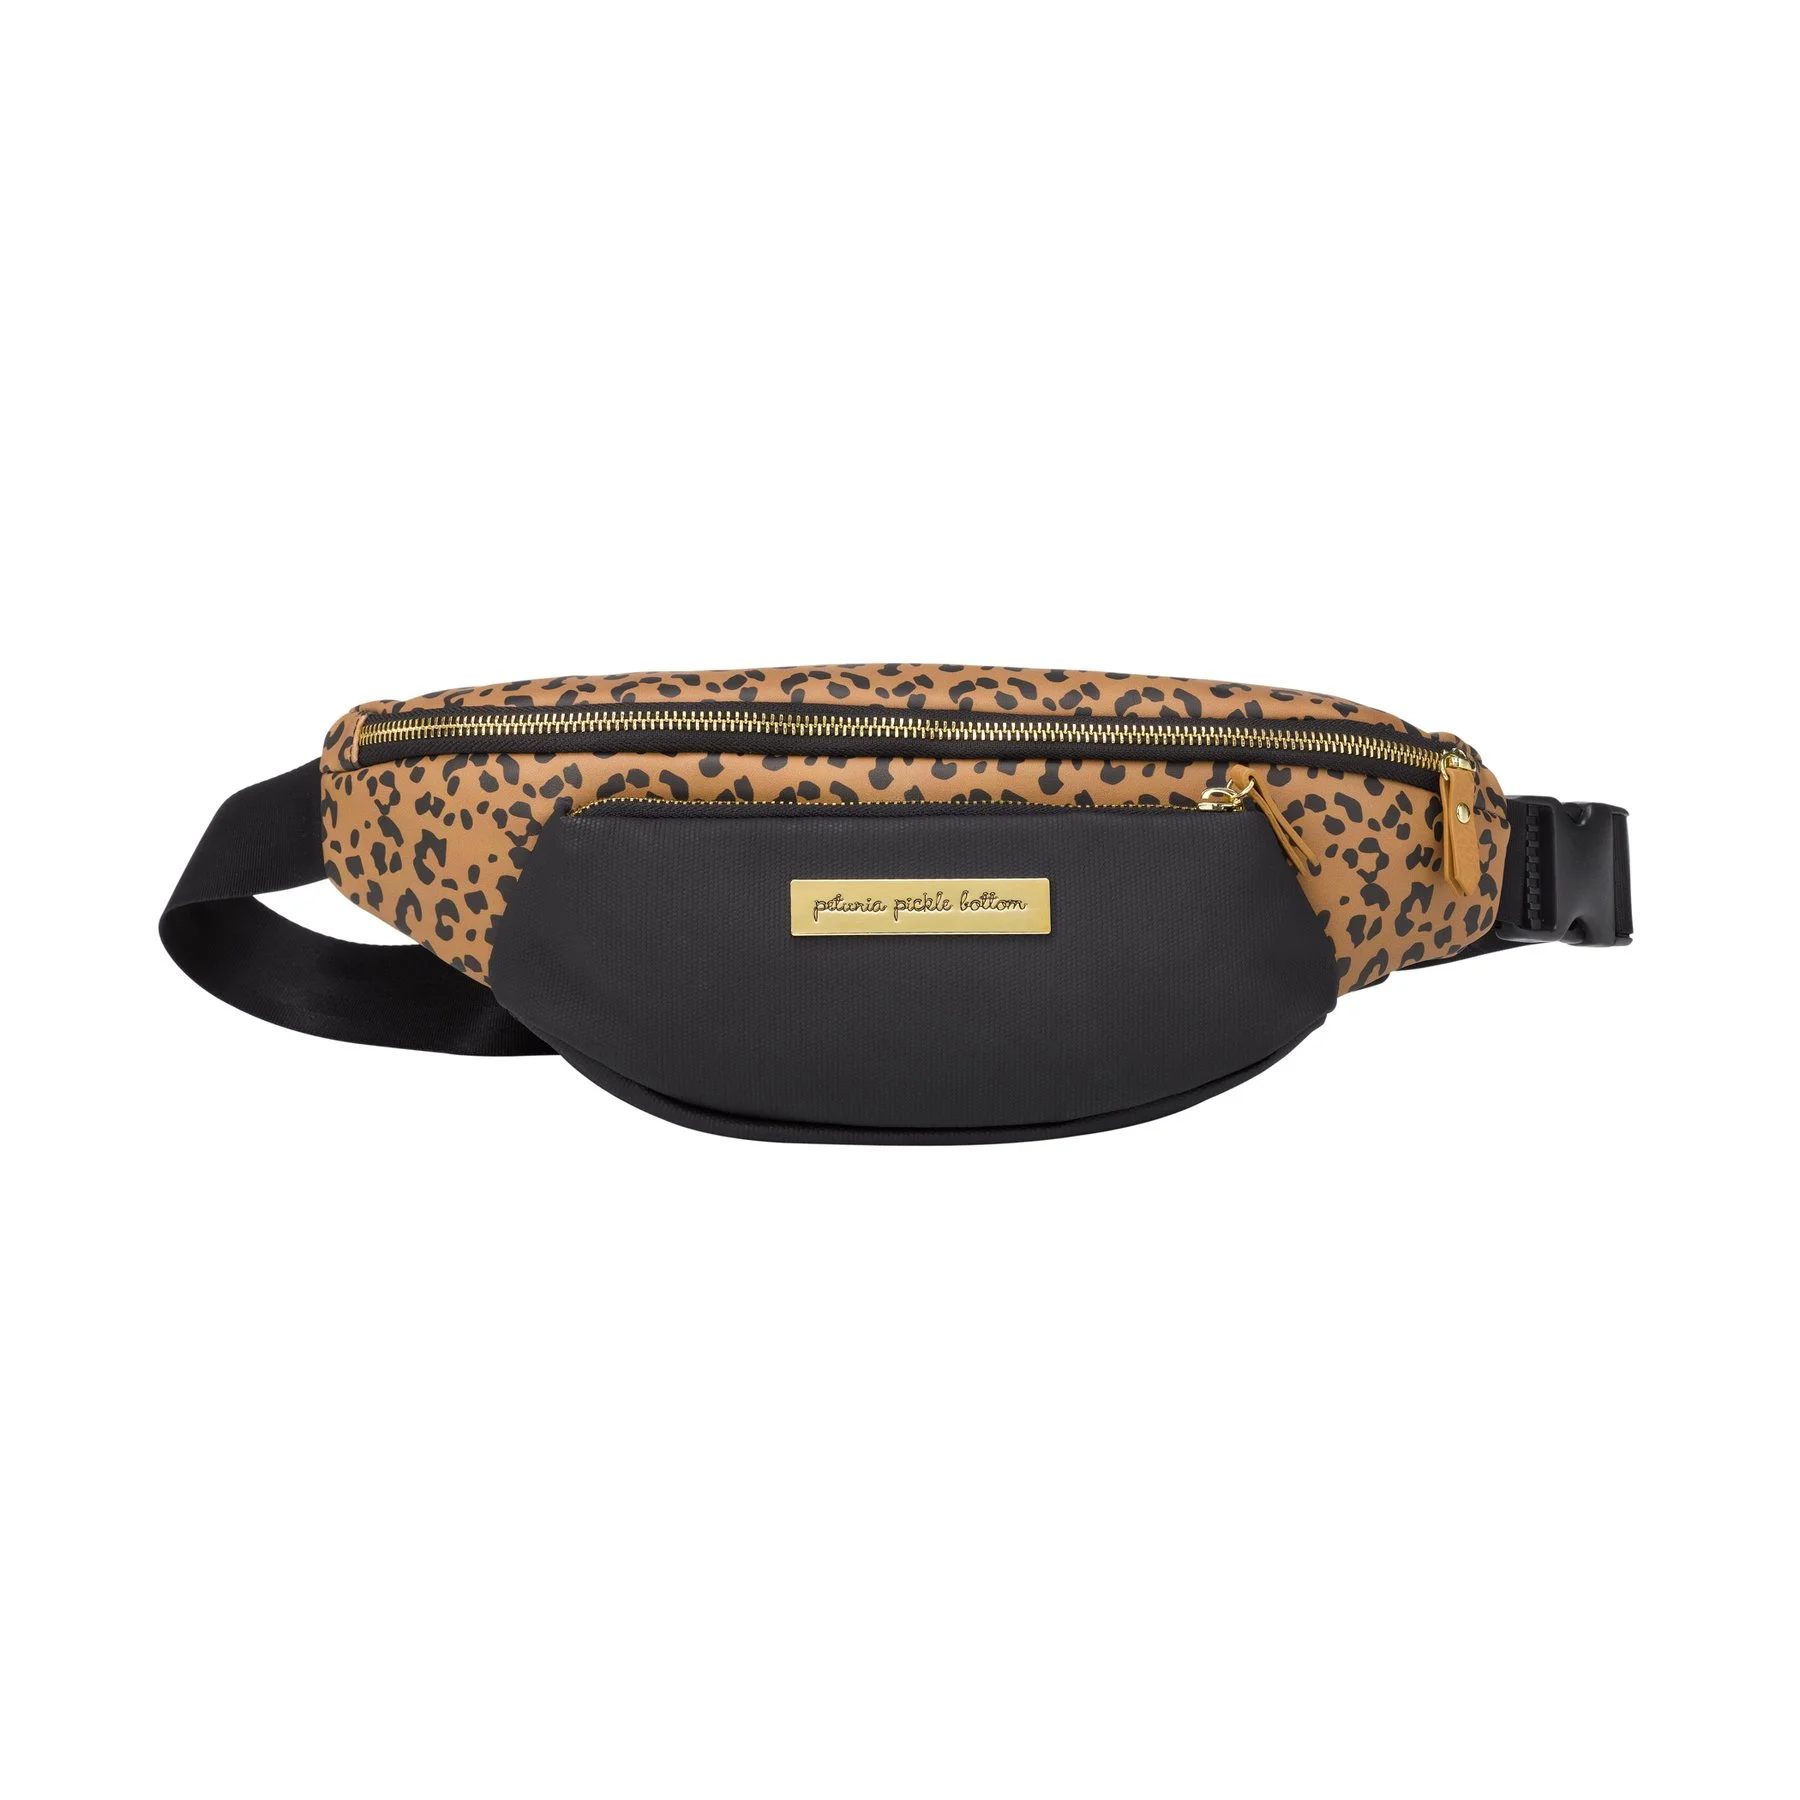 All Around Belt Bag – Leopard Leatherette